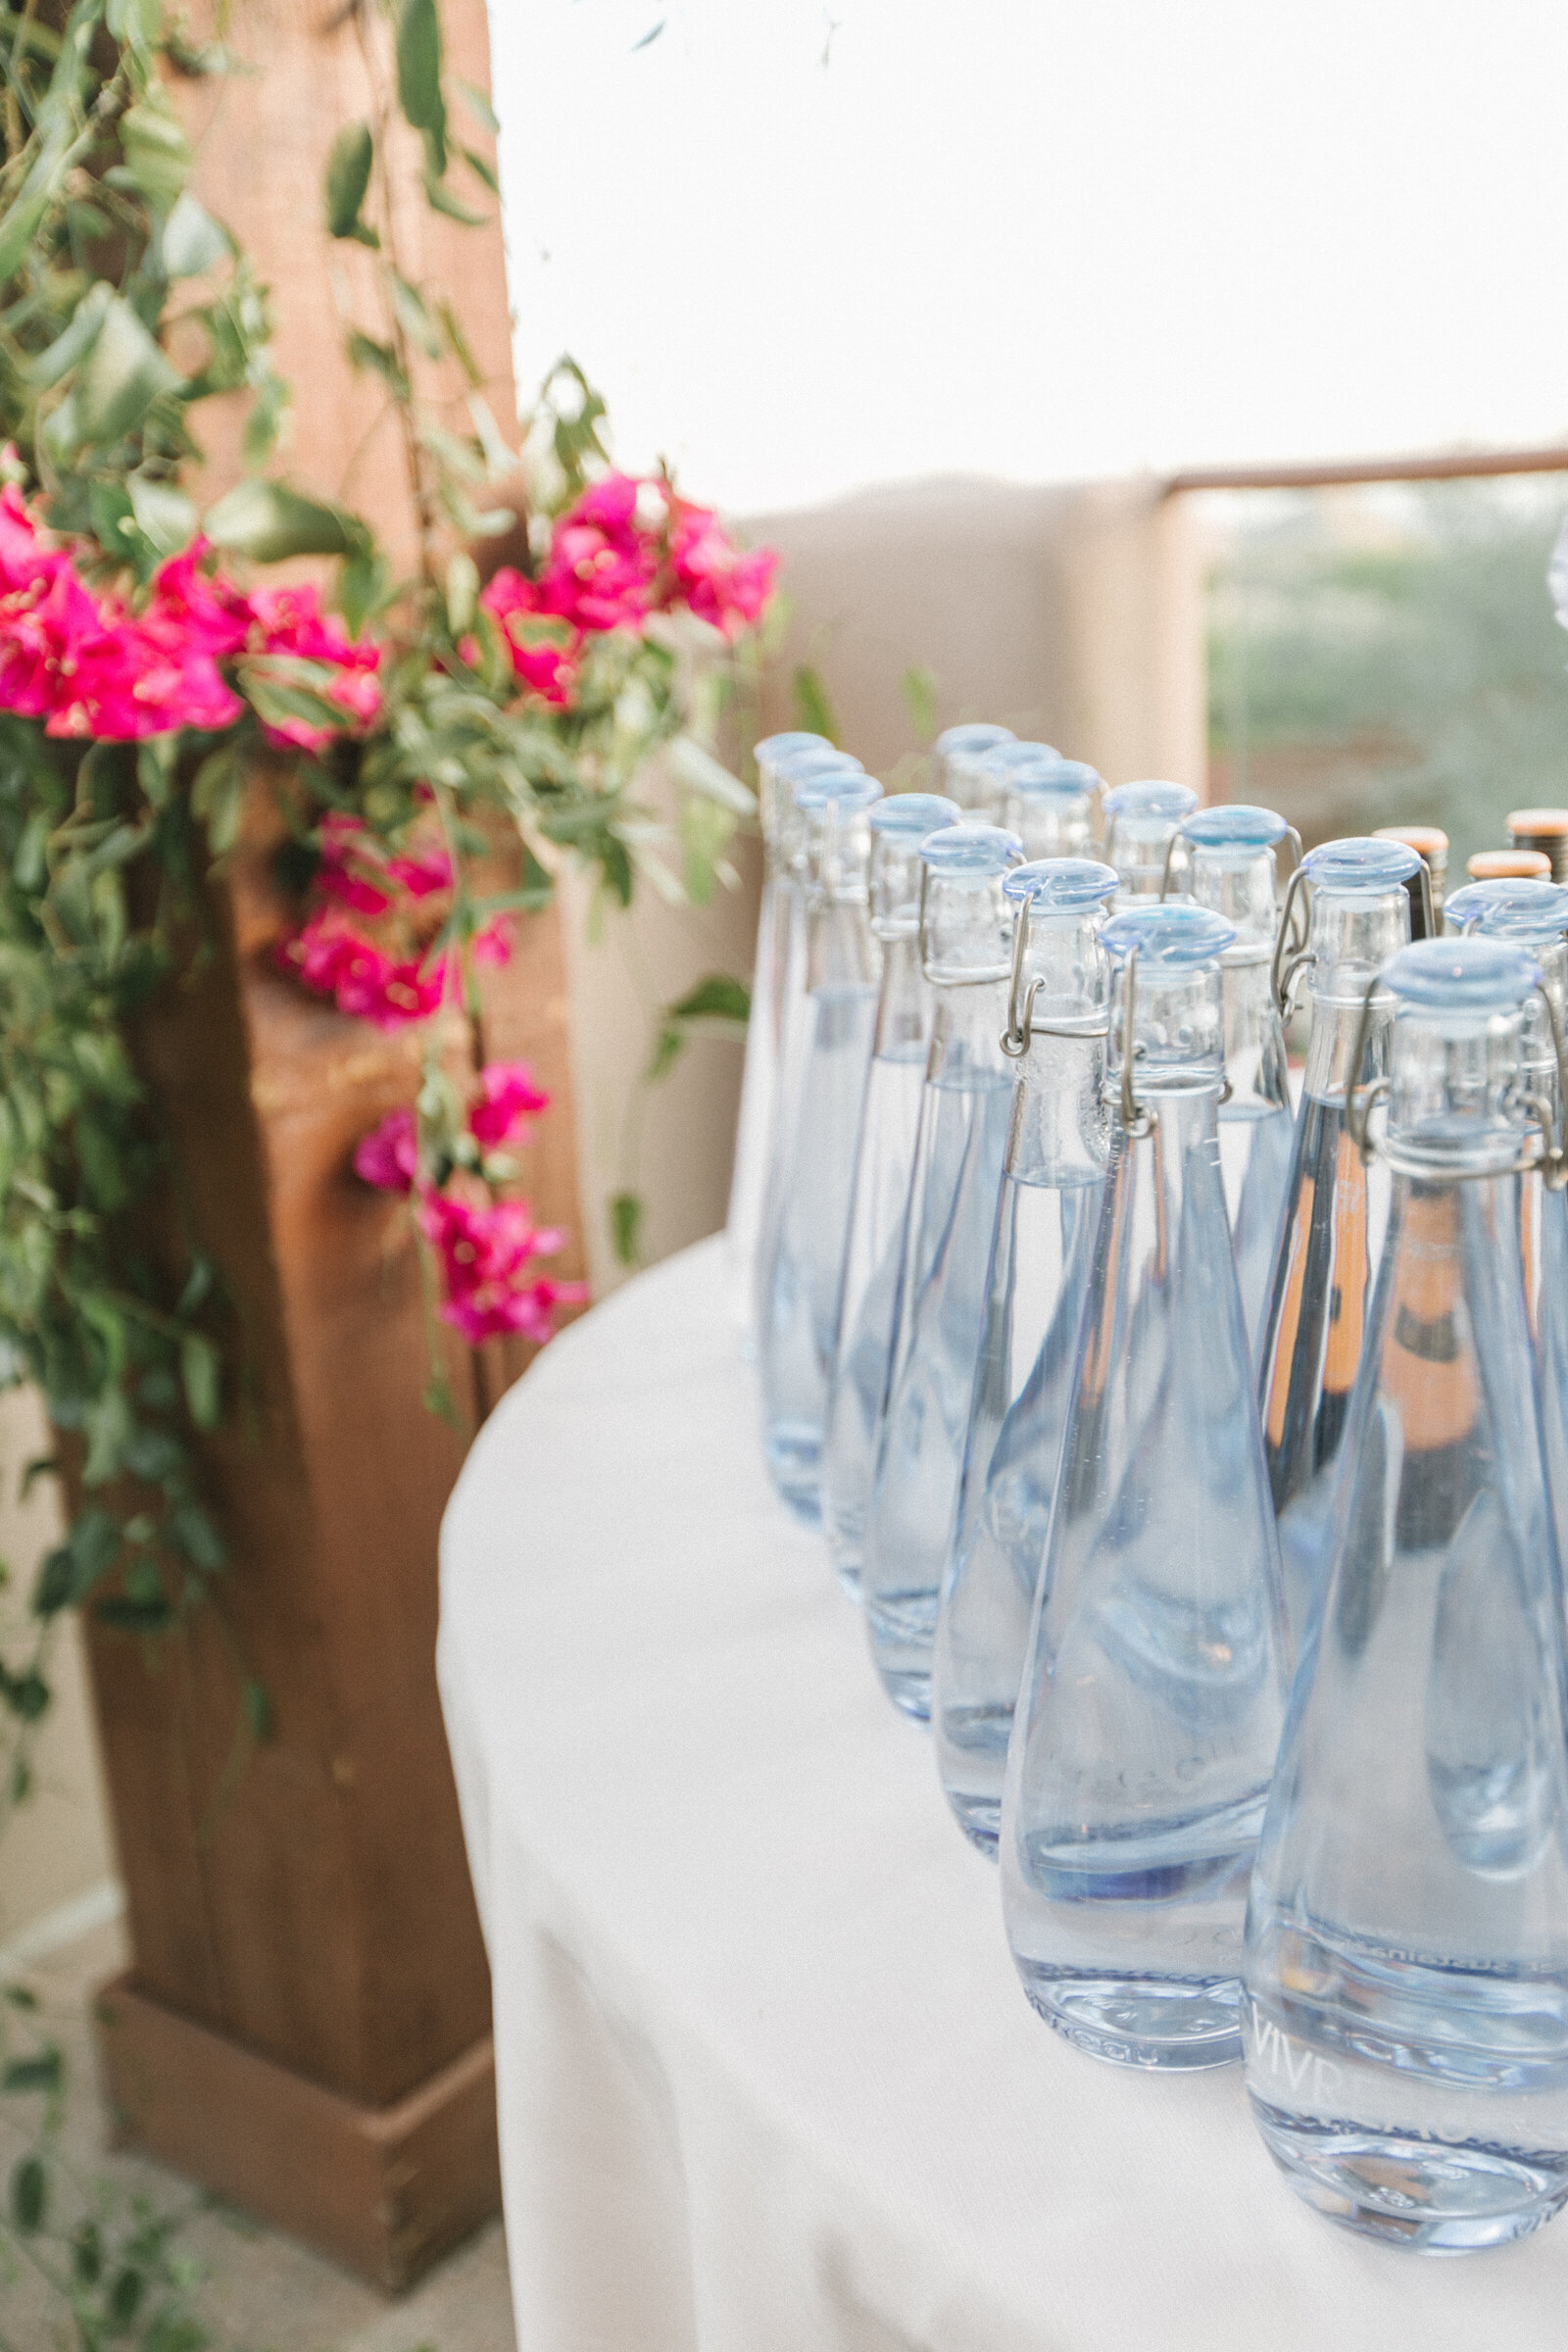 Blue bottle decor at wedding reception